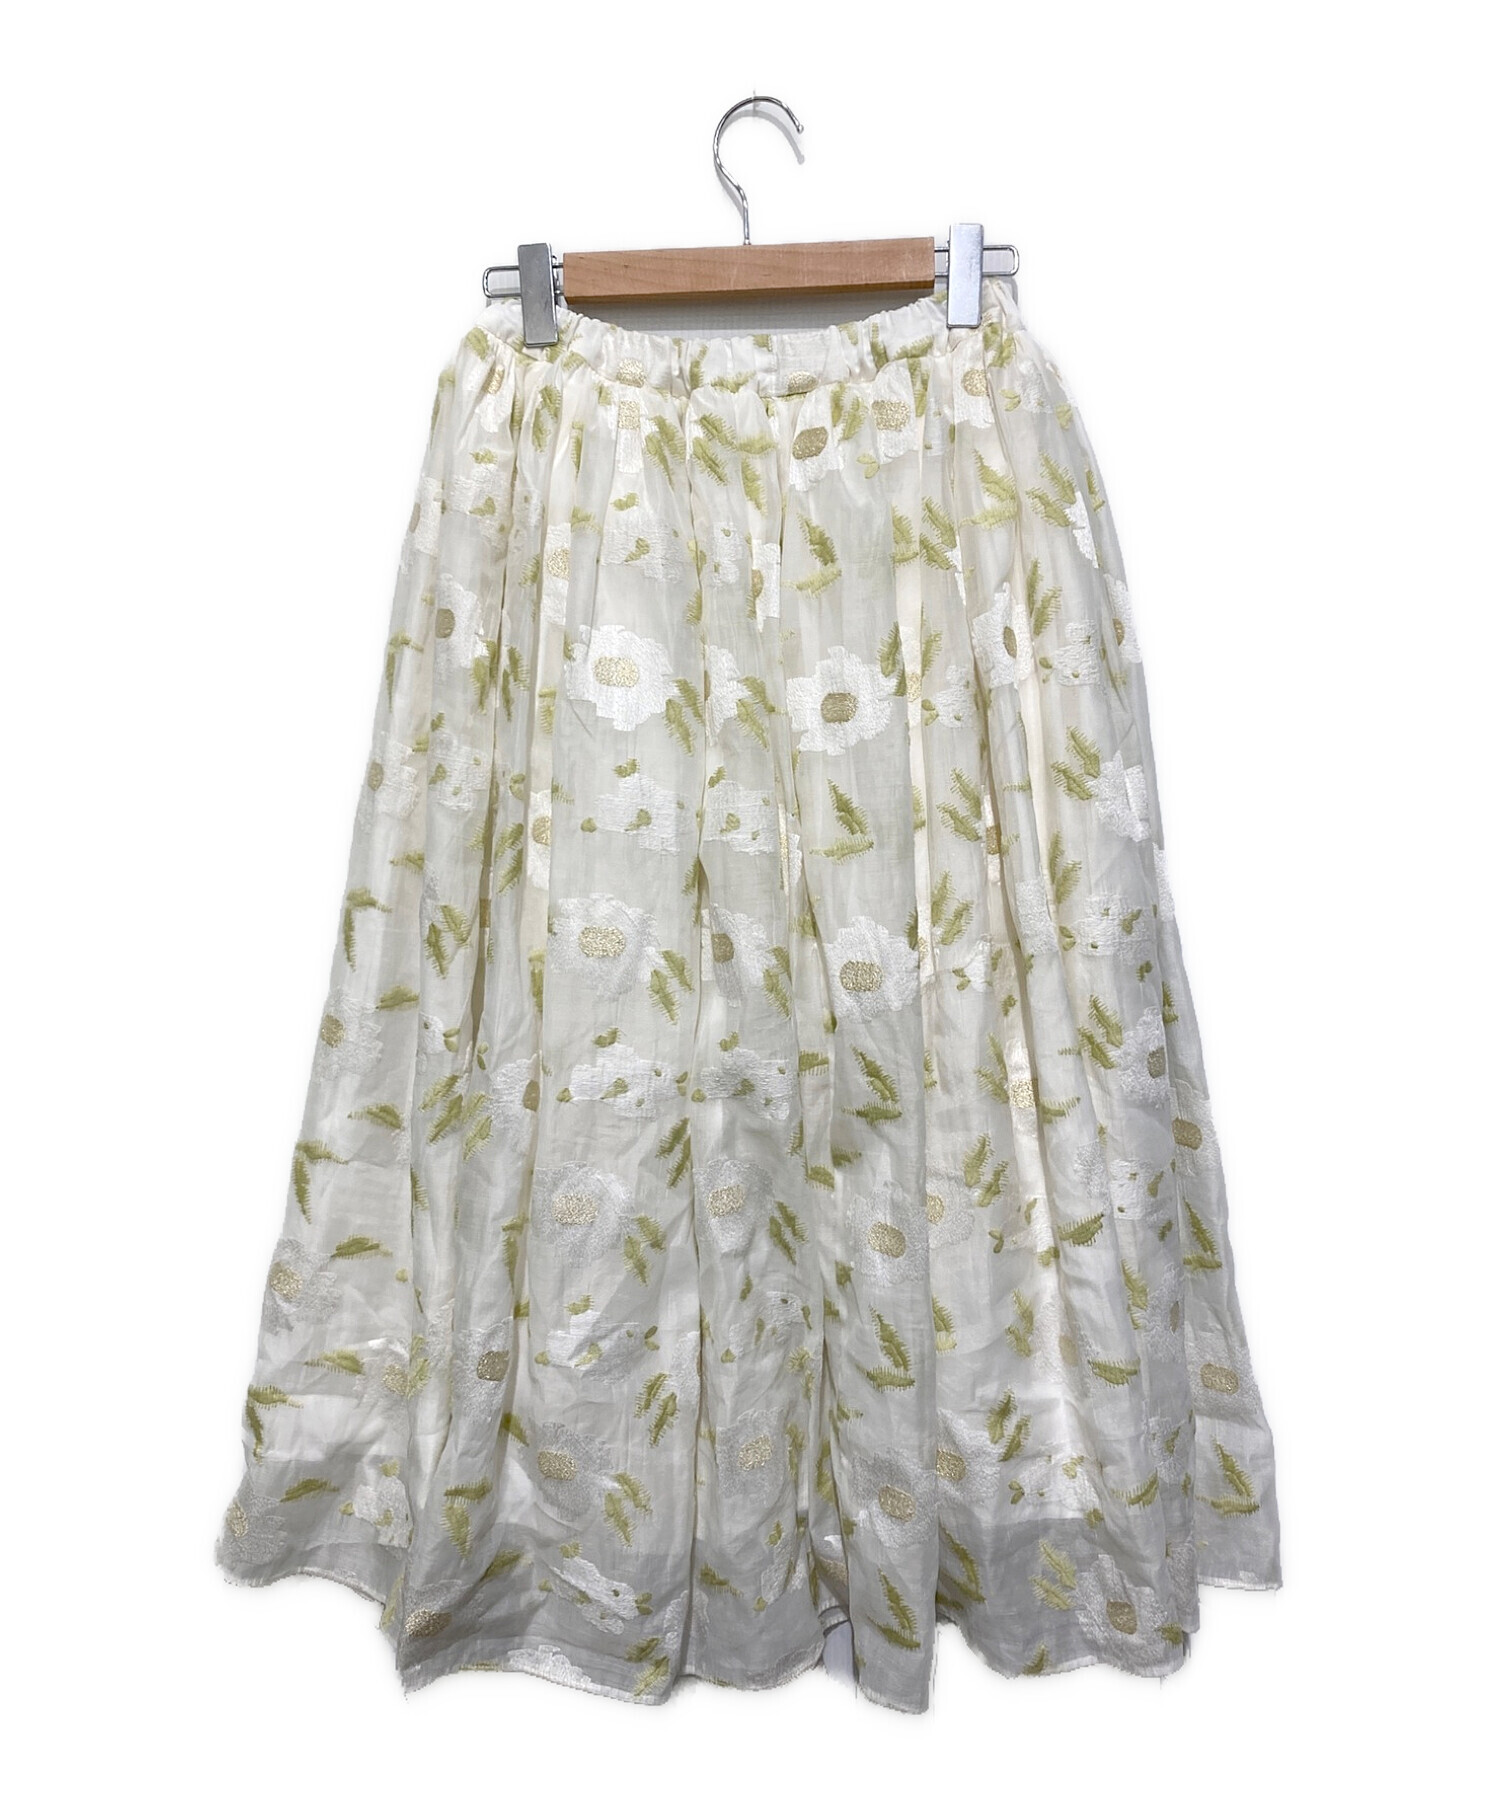 SEVEN TEN by MIHO KAWAHITO (セブン テン バイ ミホ カワヒト) オーガンジー刺繍スカート ホワイト×グリーン  サイズ:SIZE S